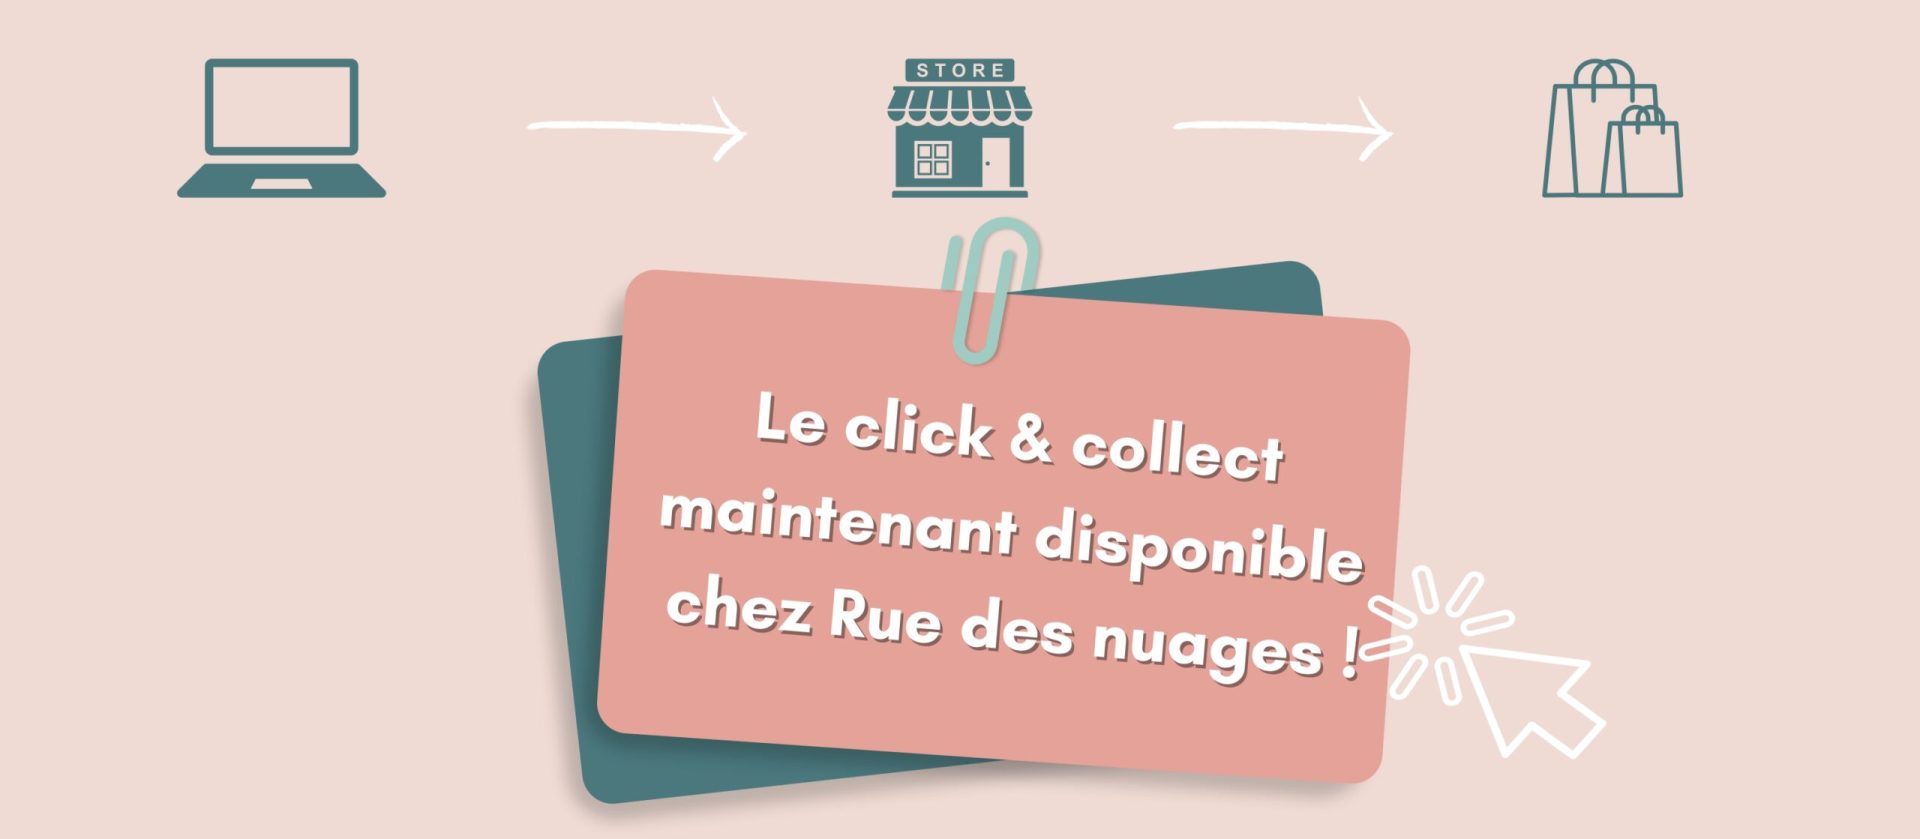 Click and collect chez Rue des nuages